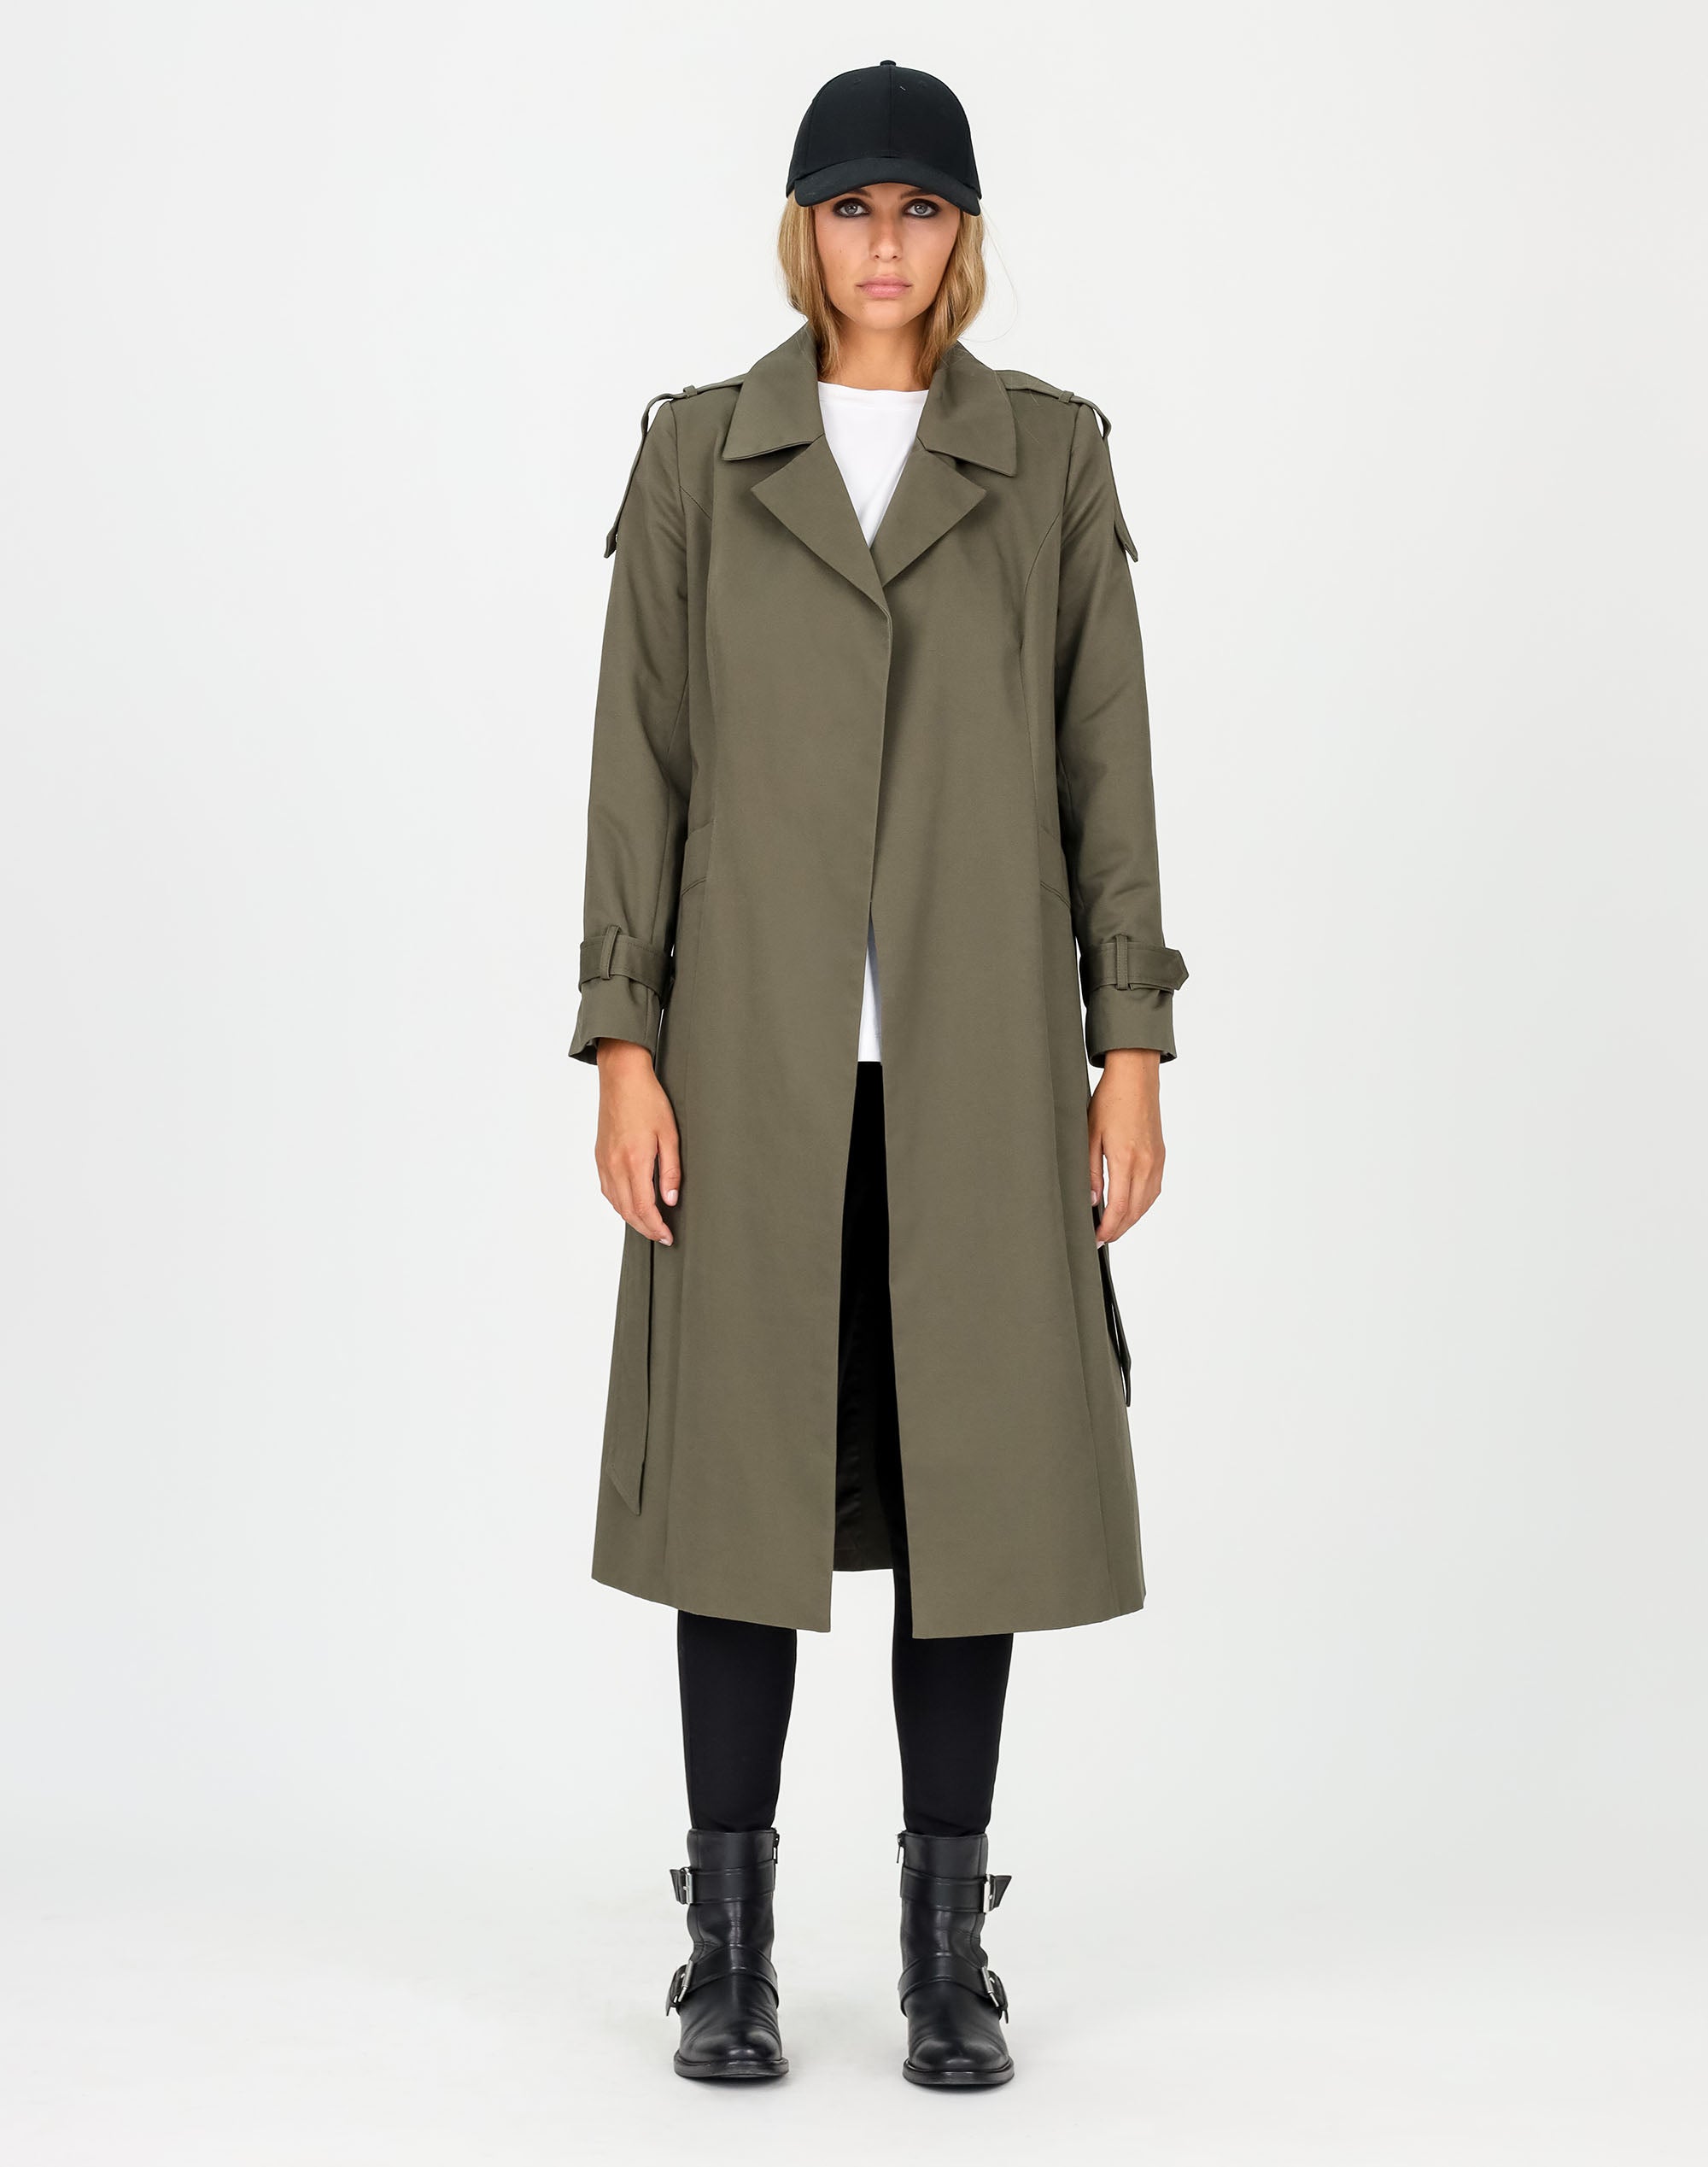 Trench Wrap Coat - Green - Jackets - Long - Women's Clothing - Storm